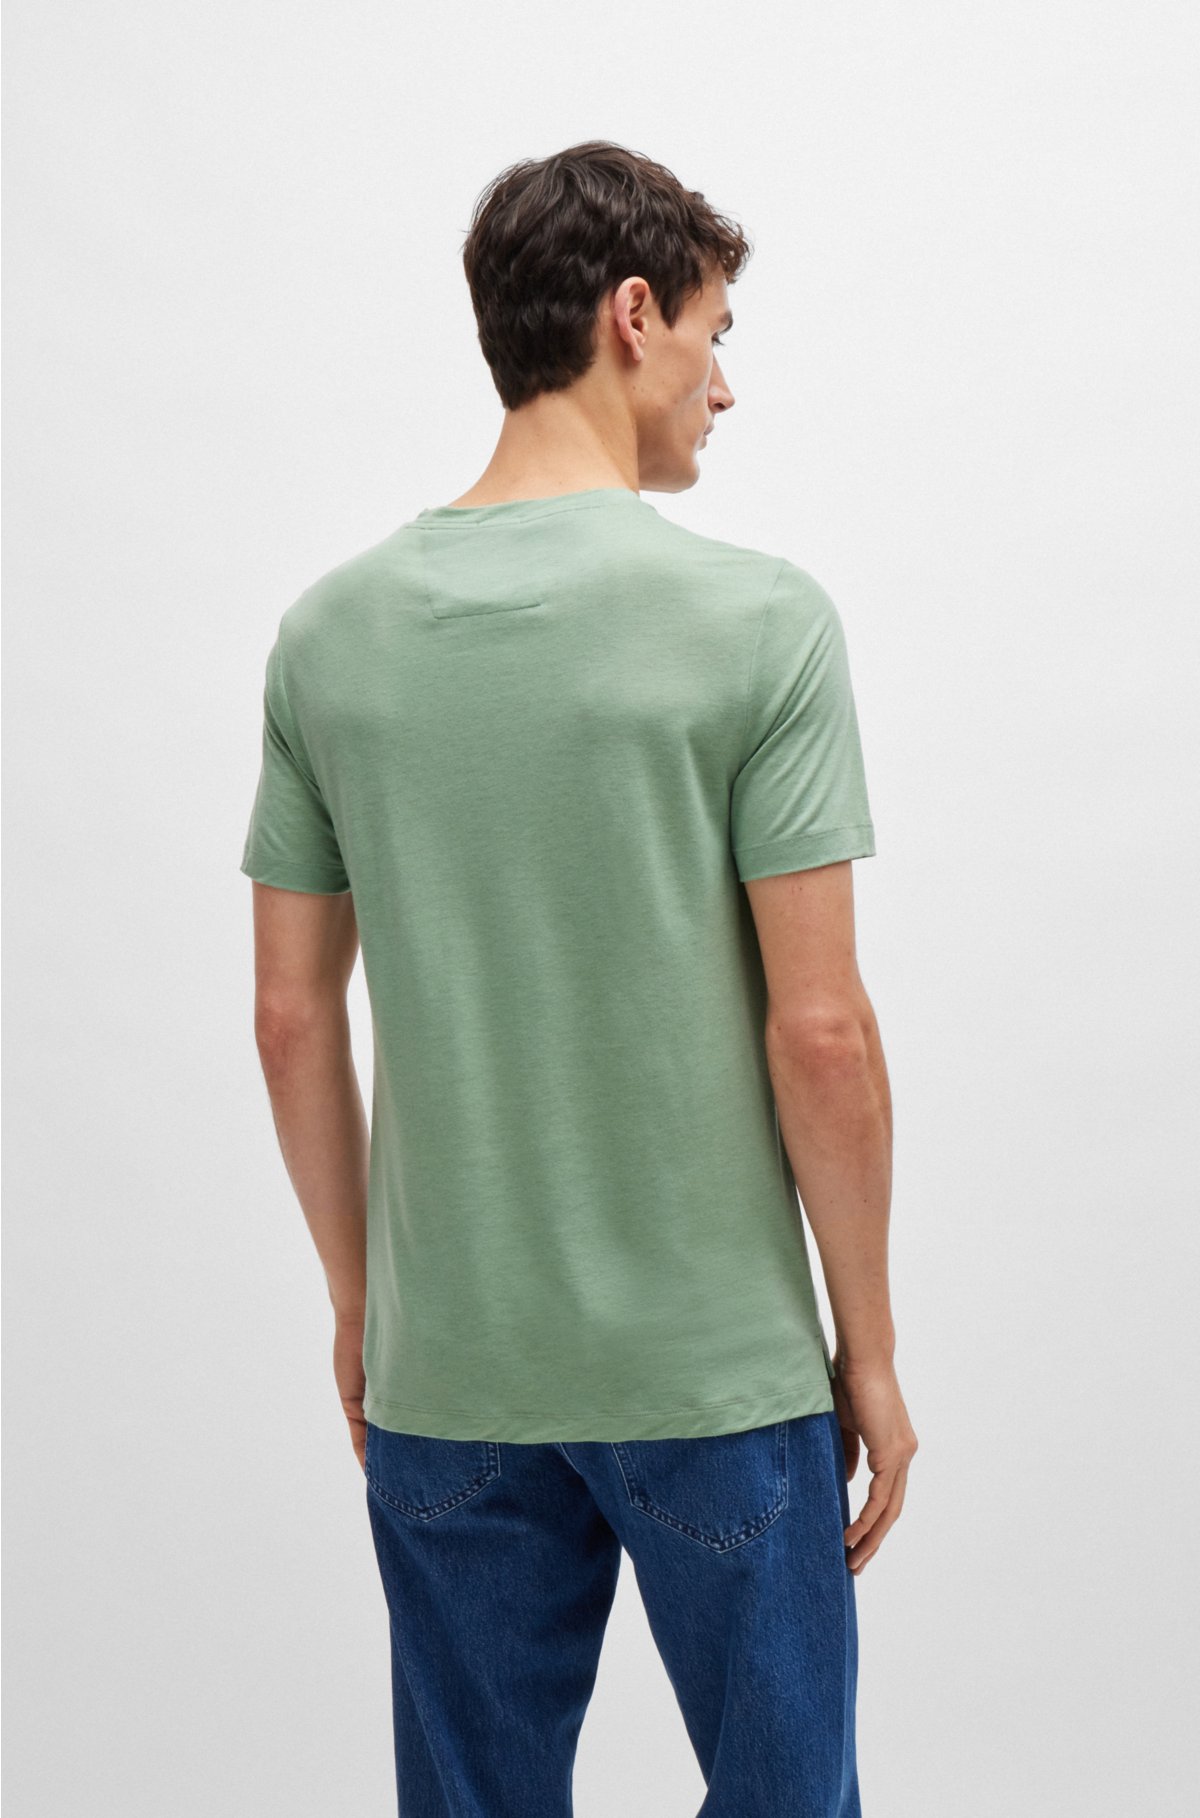 Slim-fit T-shirt in performance fabric, Light Green